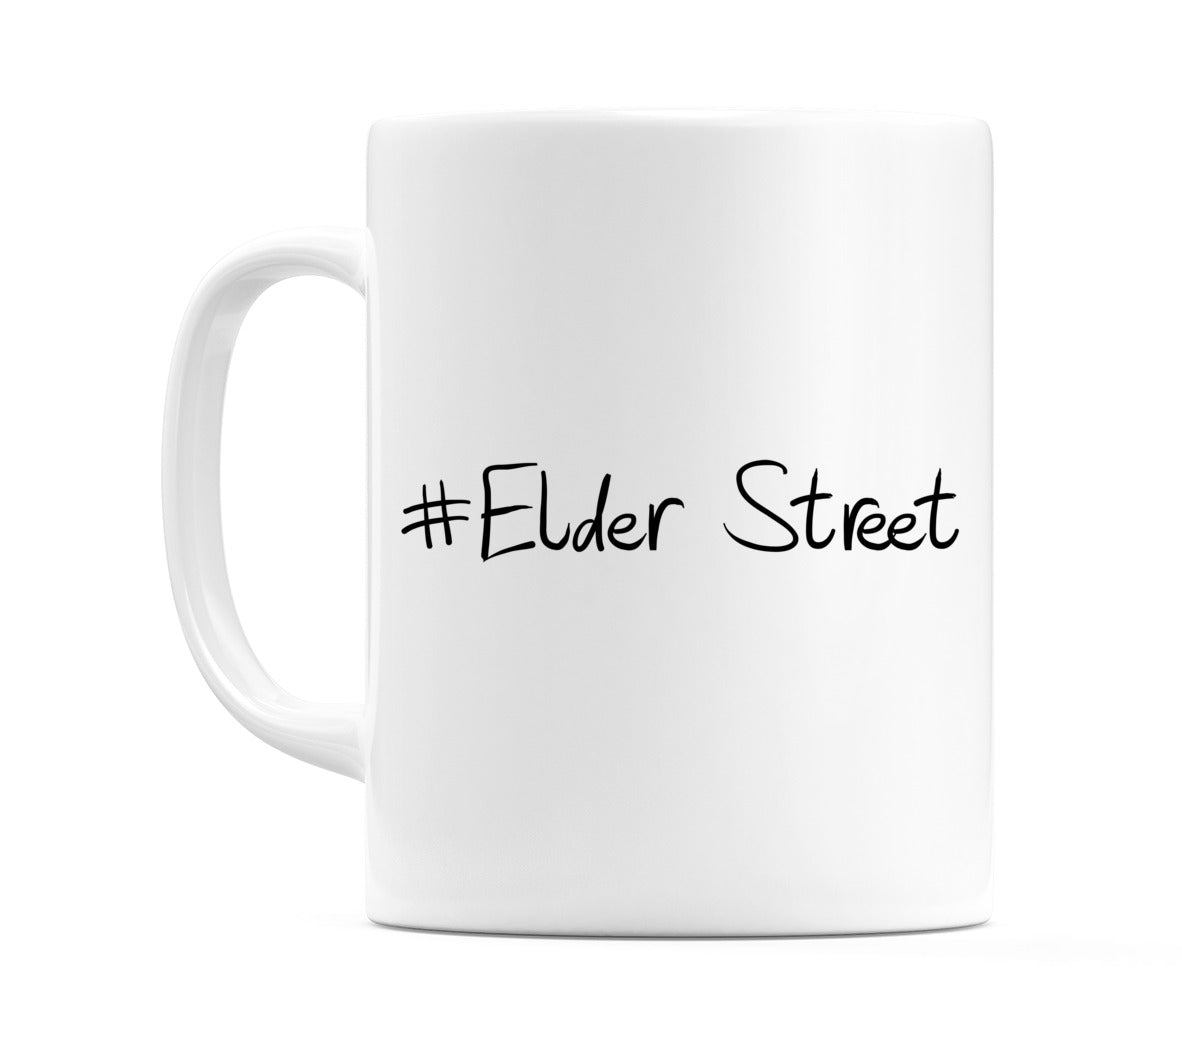 #Elder Street Mug